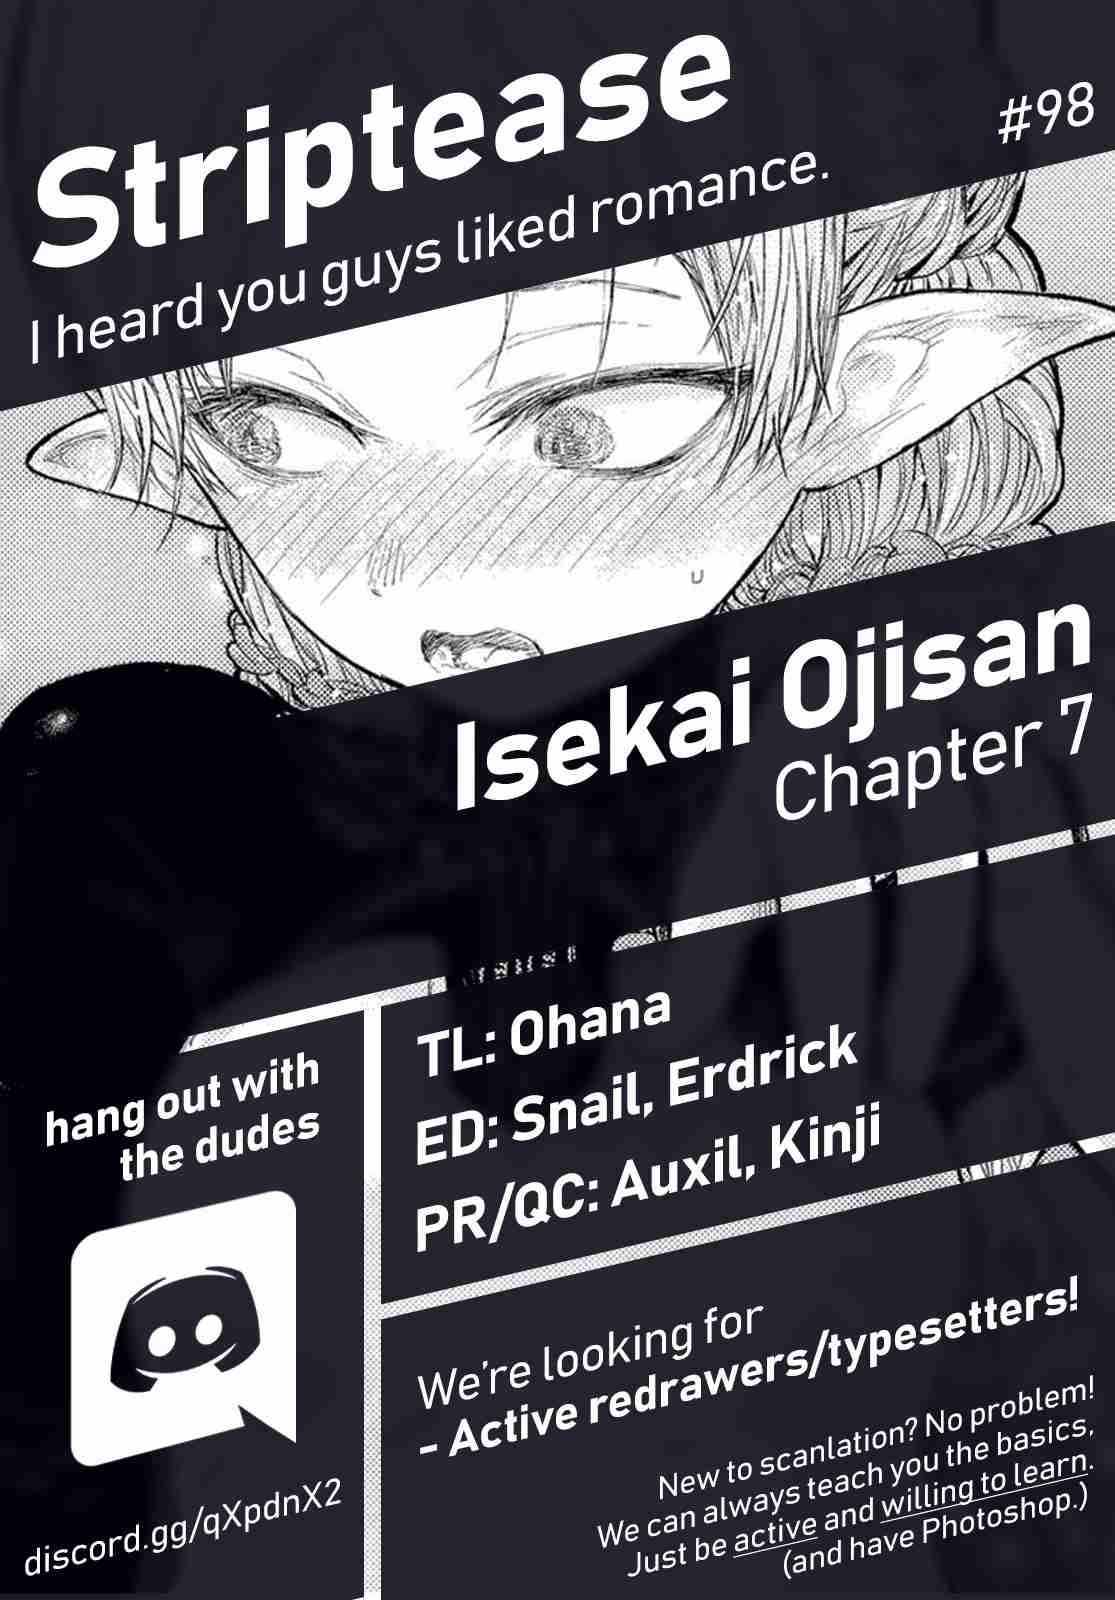 Isekai Ojisan Vol. 1 Ch. 7